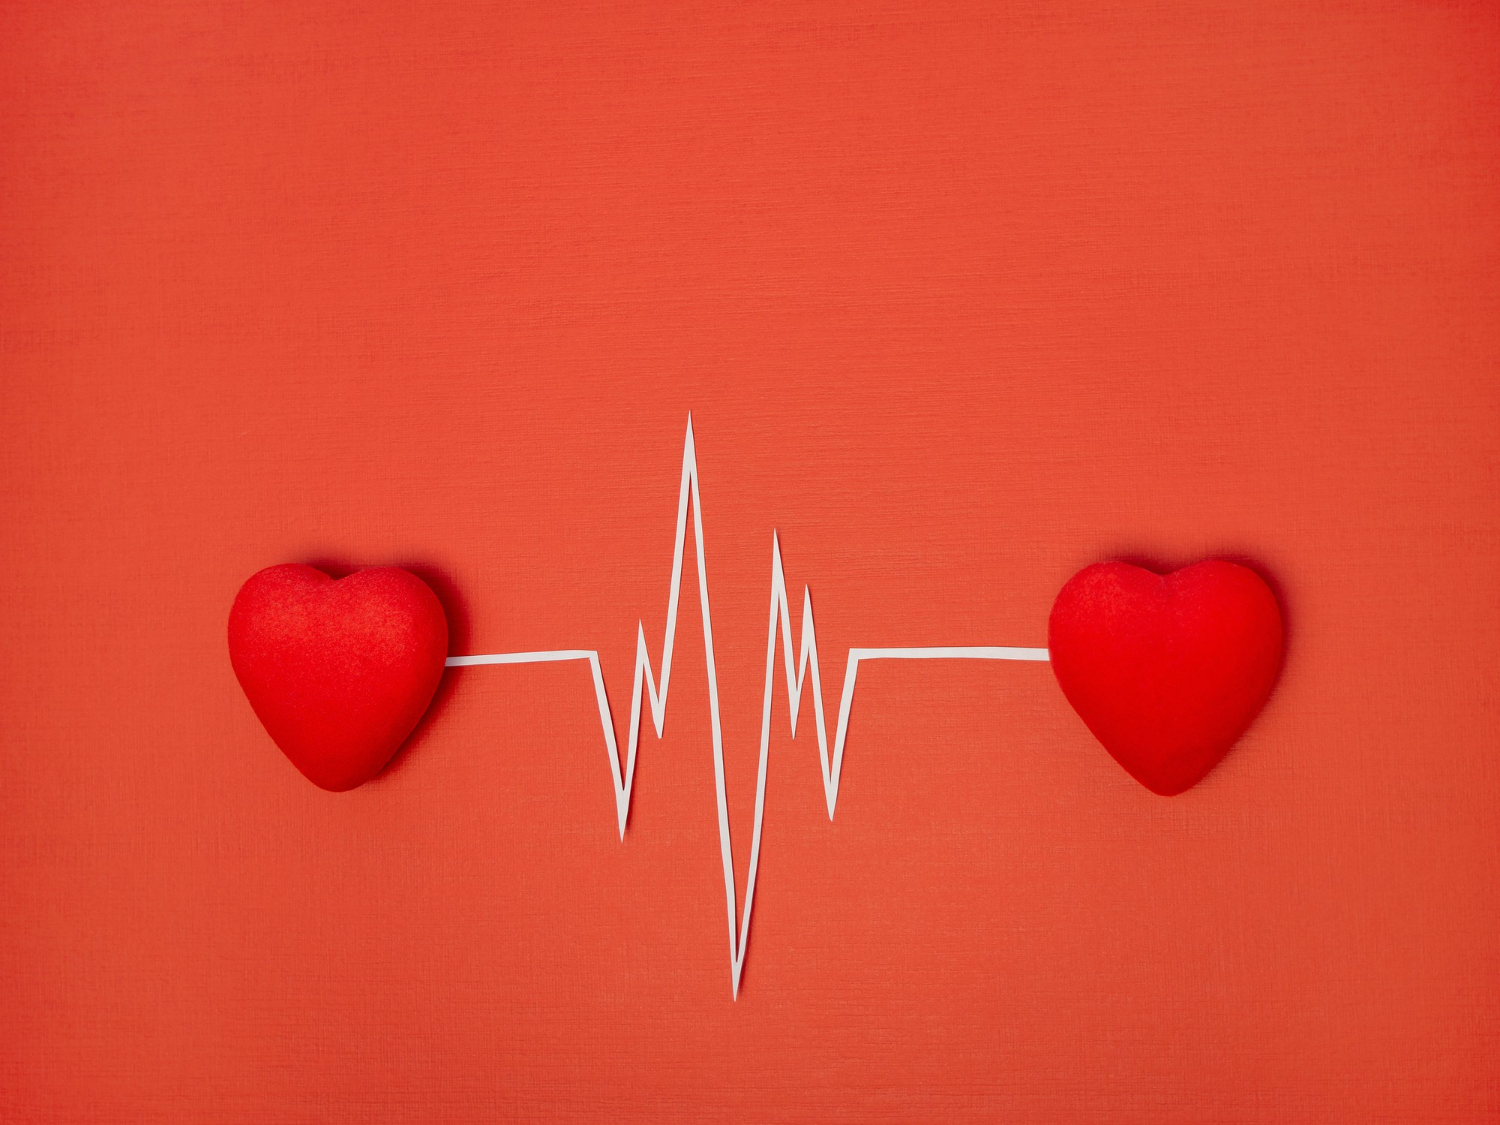 rhythm two hearts heartbeat cardiogram writing a poem